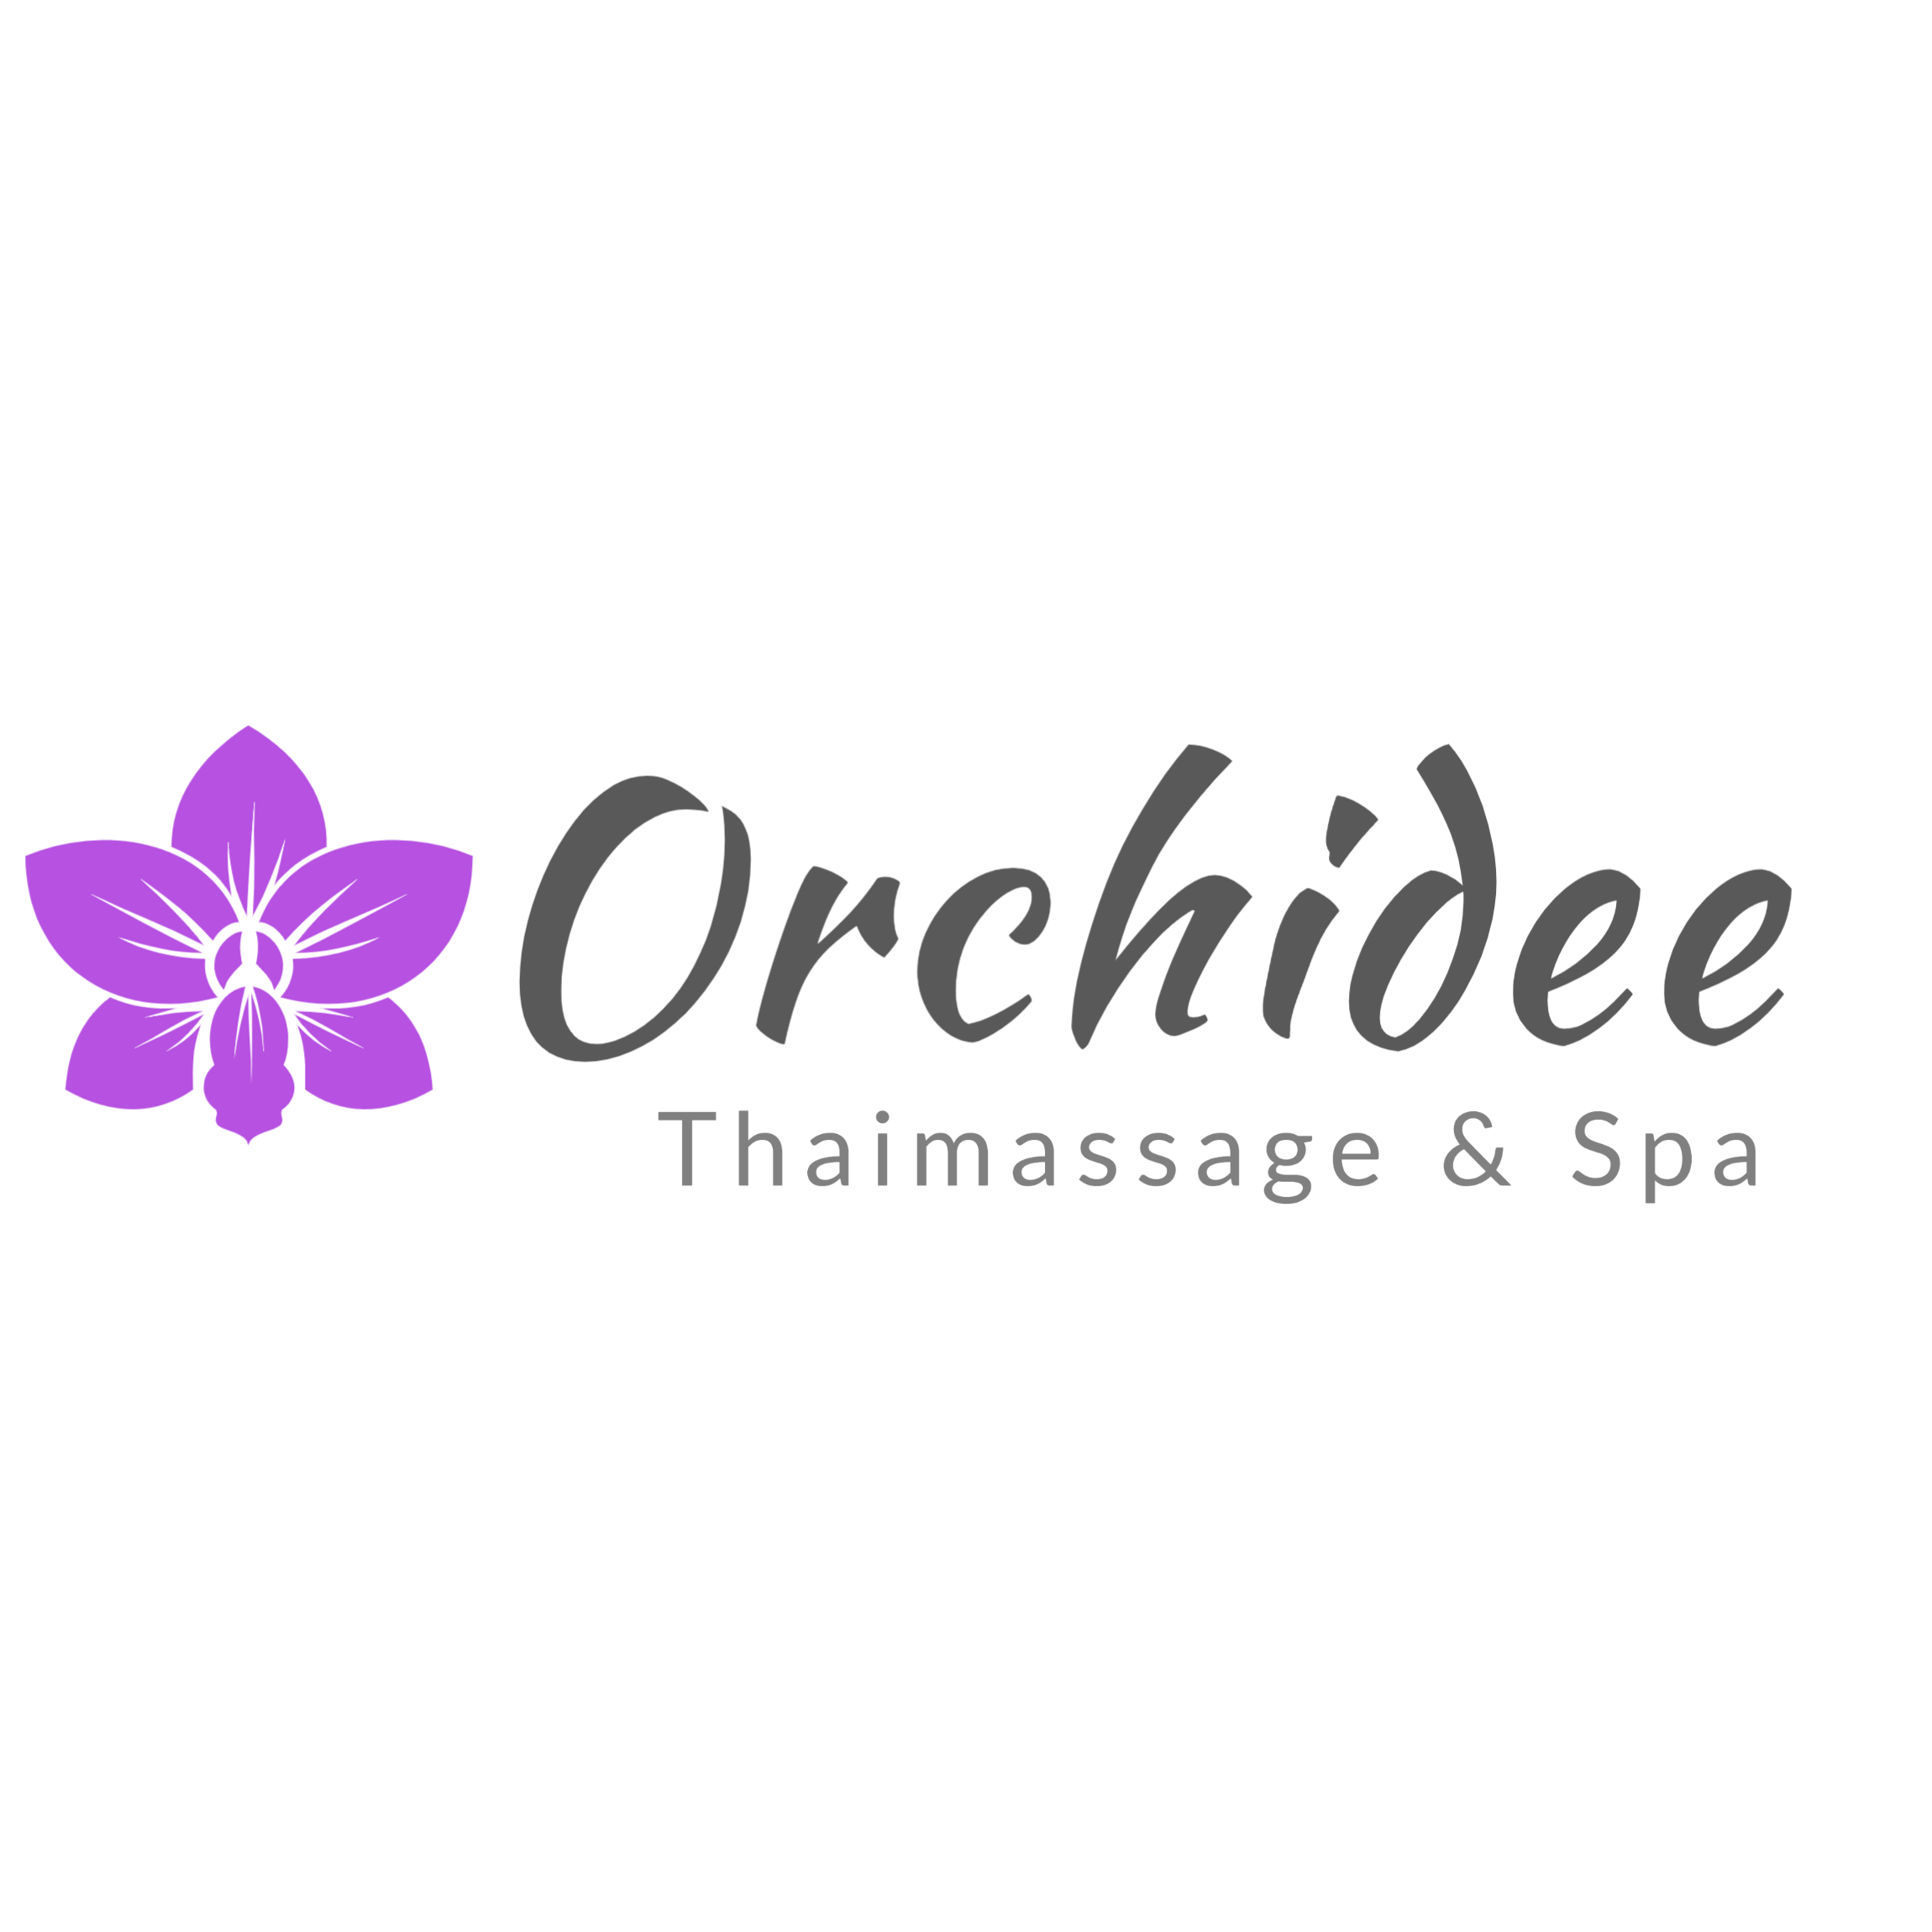 Orchidee Thaimassage & Spa Logo